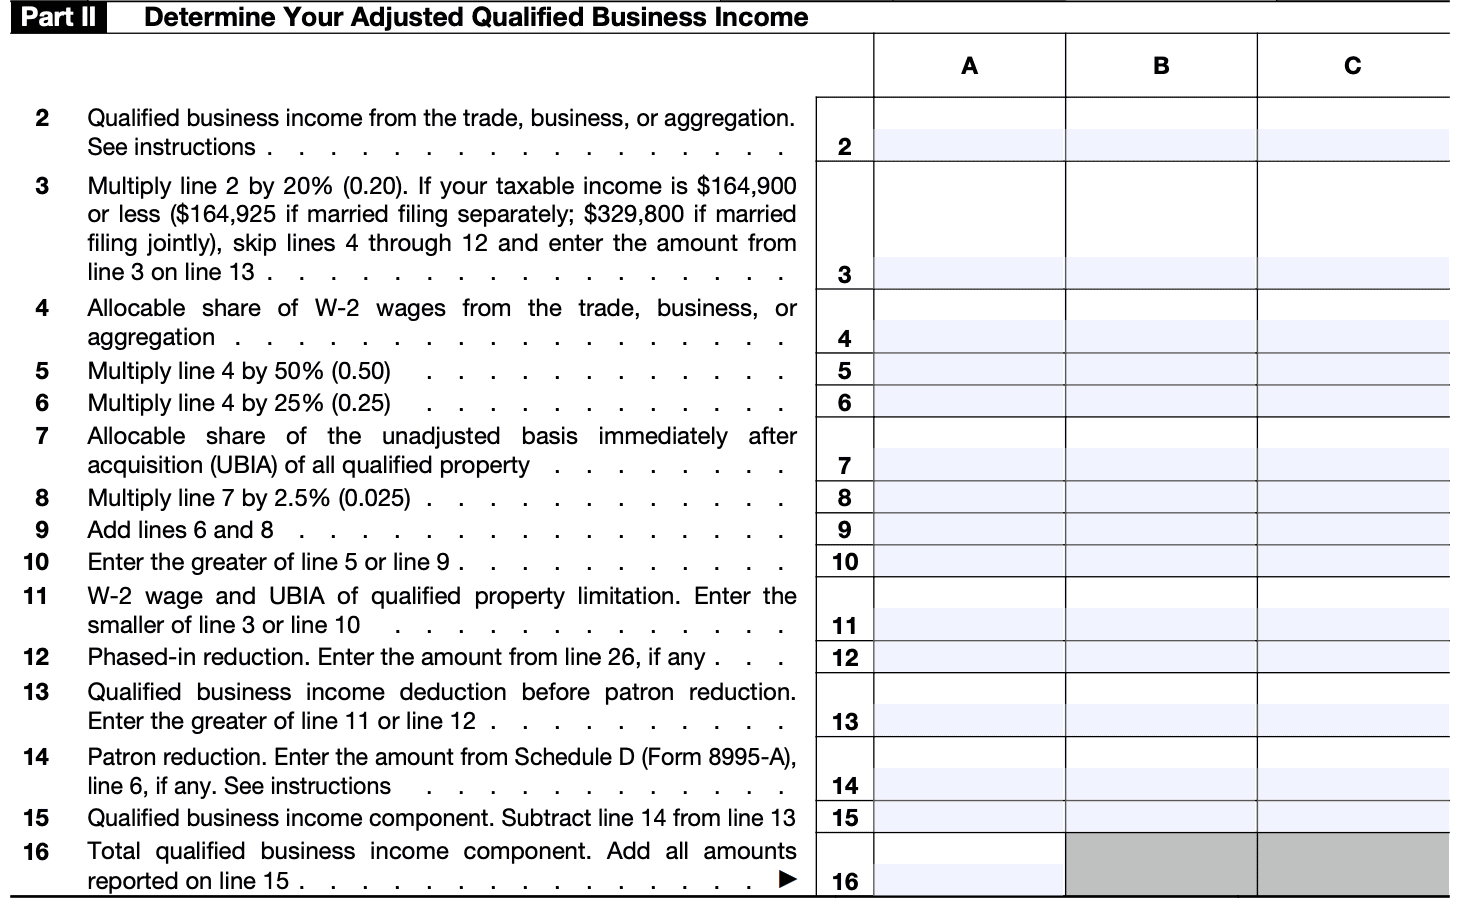 irs form 8995-a part II, determine adjusted QBI income